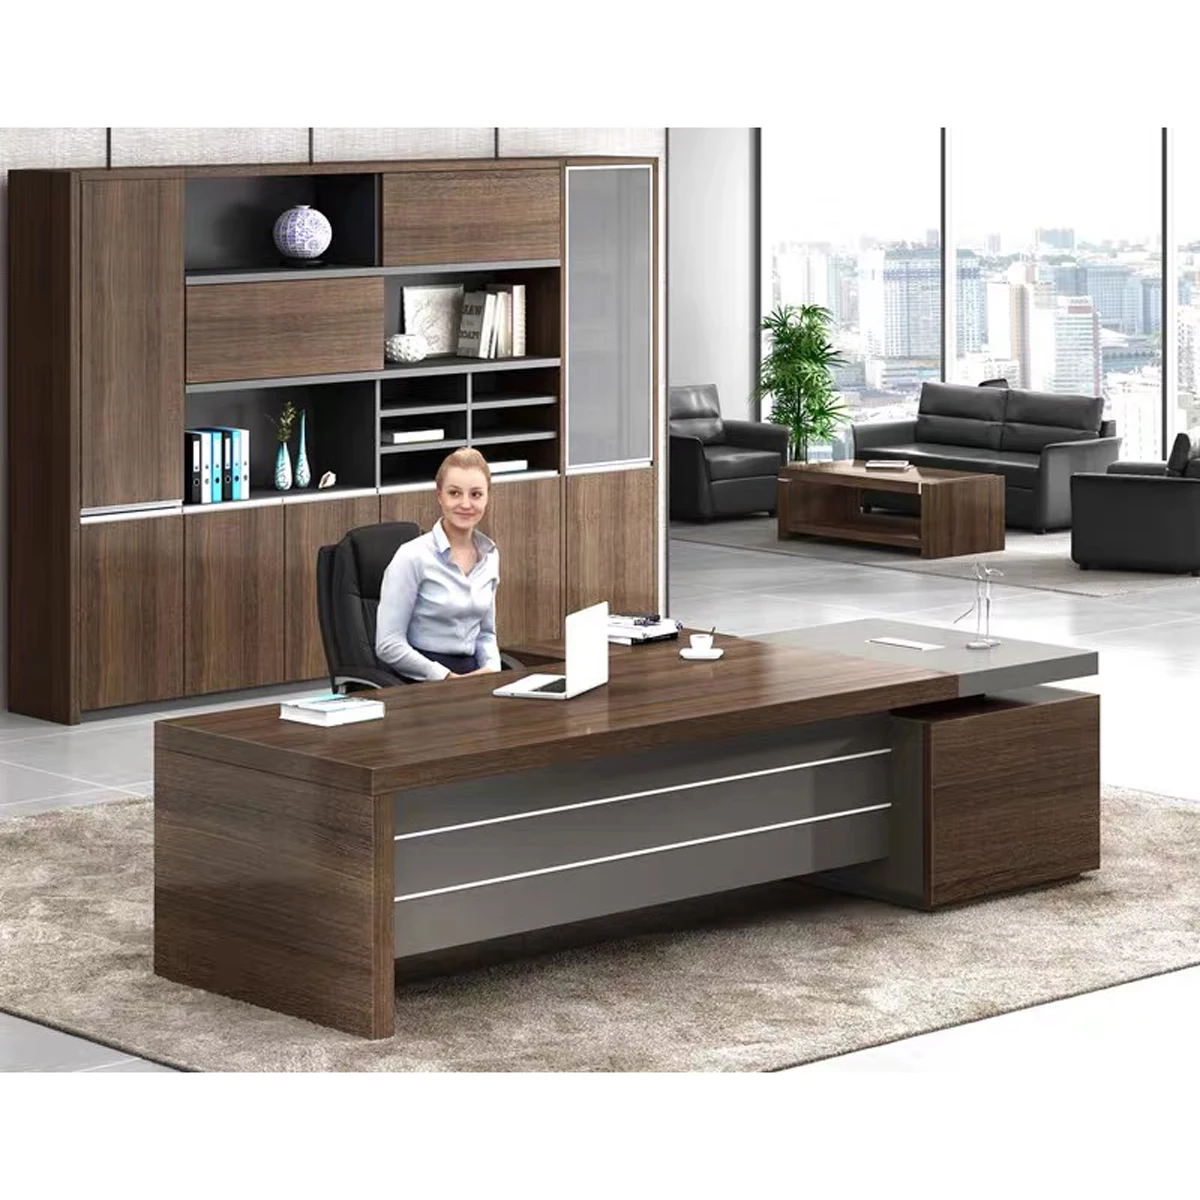 Source Luxury office desk mdf boss executive desk on m.alibaba.com